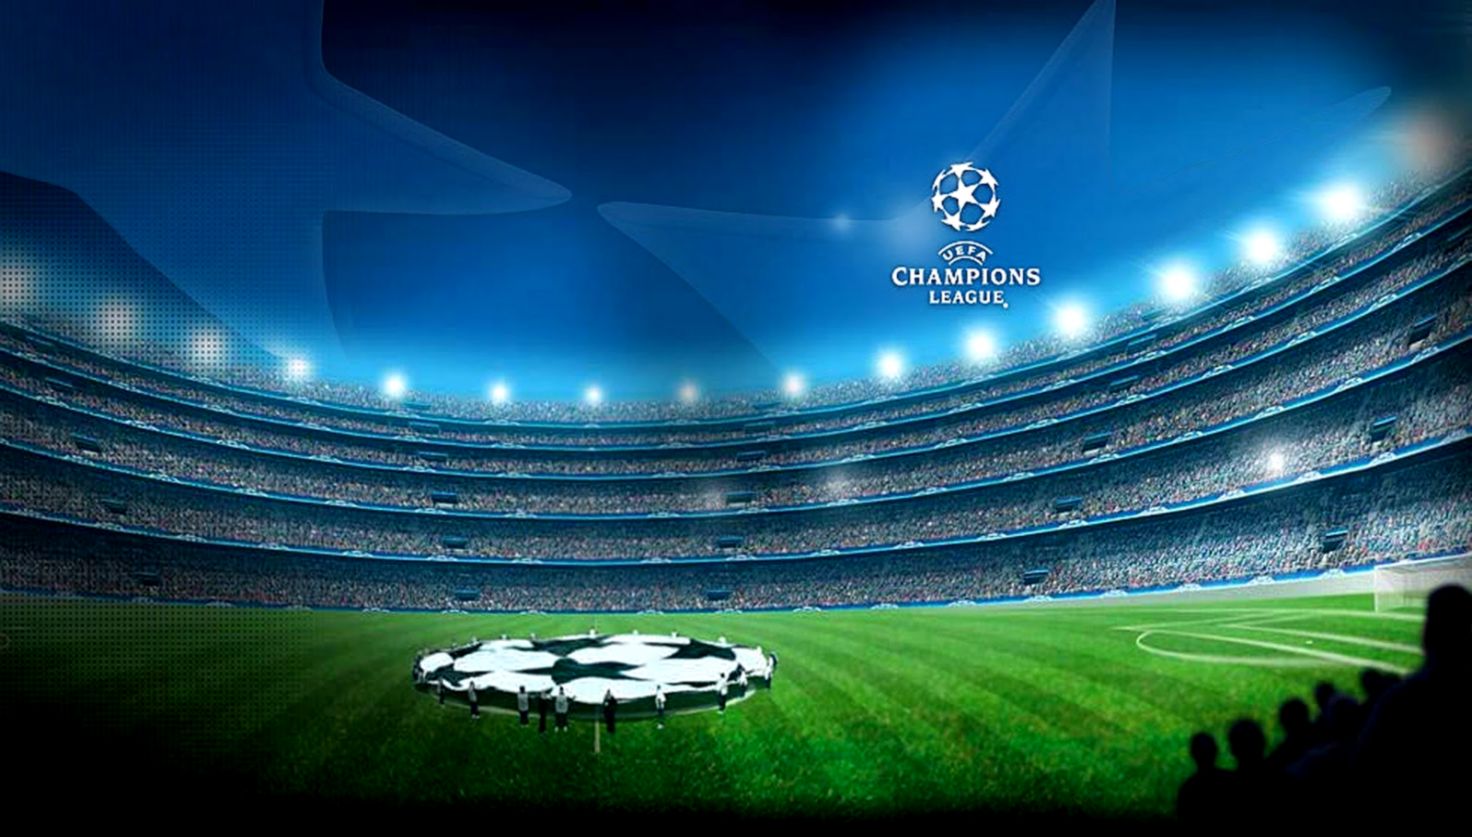 Uefa Champions League Stadium Full Hd Background